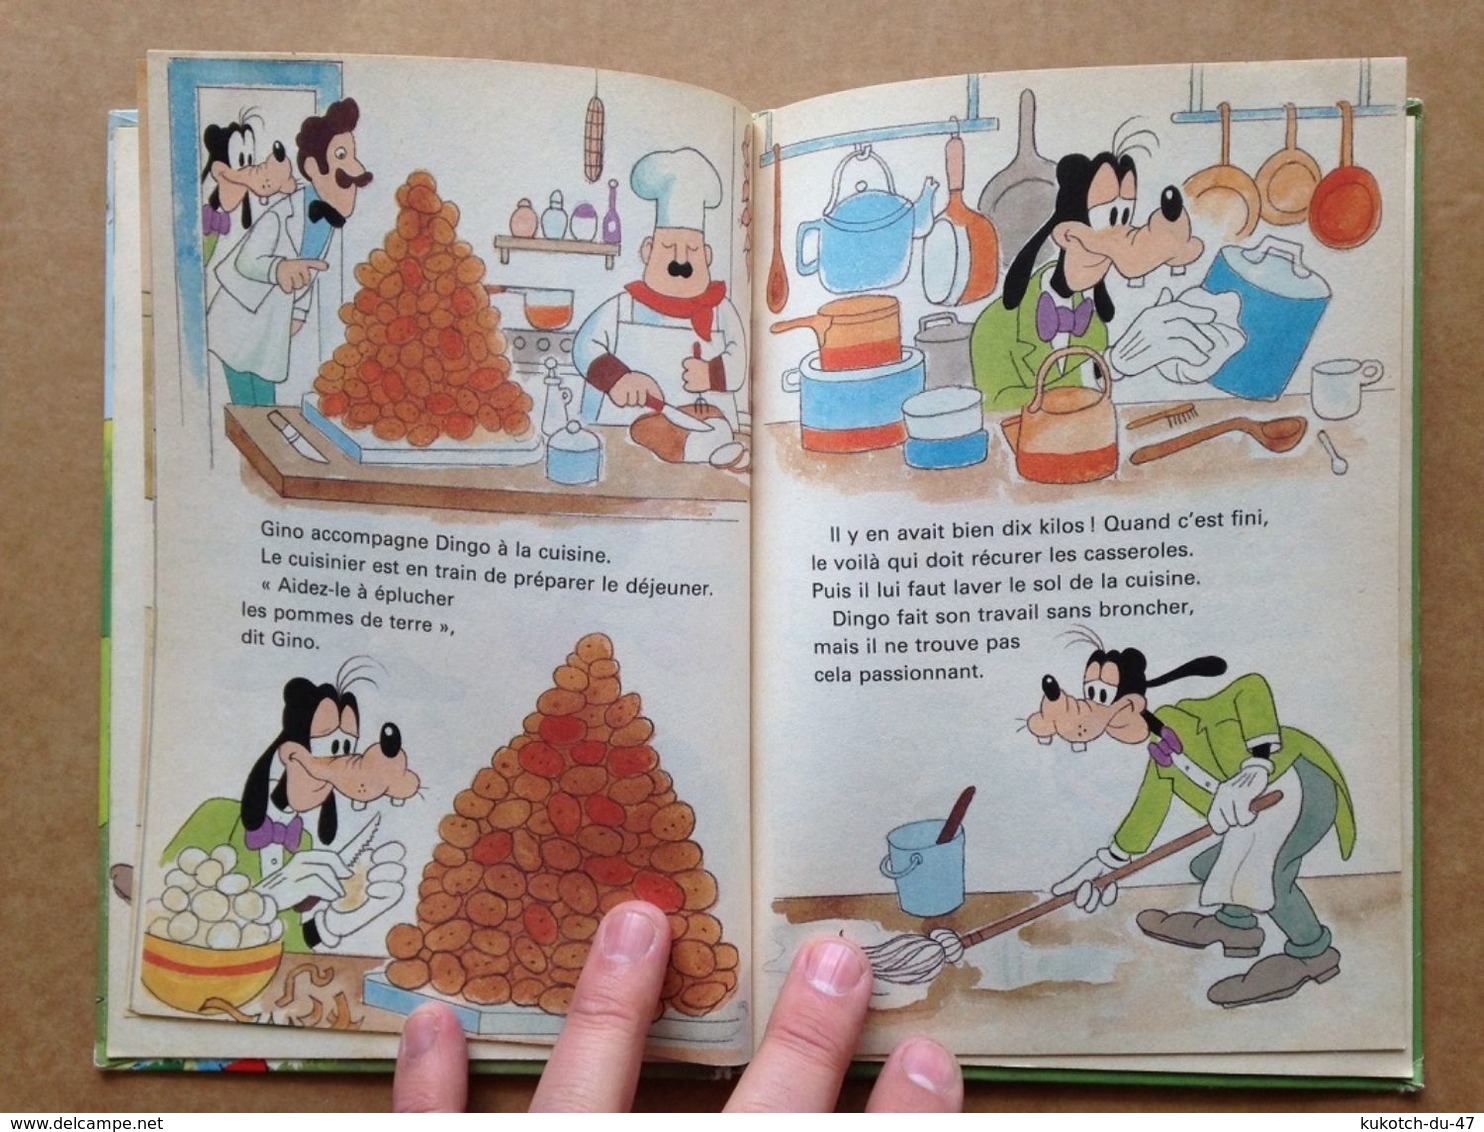 Disney - Mickey Club du livre - Dingo cherche un métier (1989)